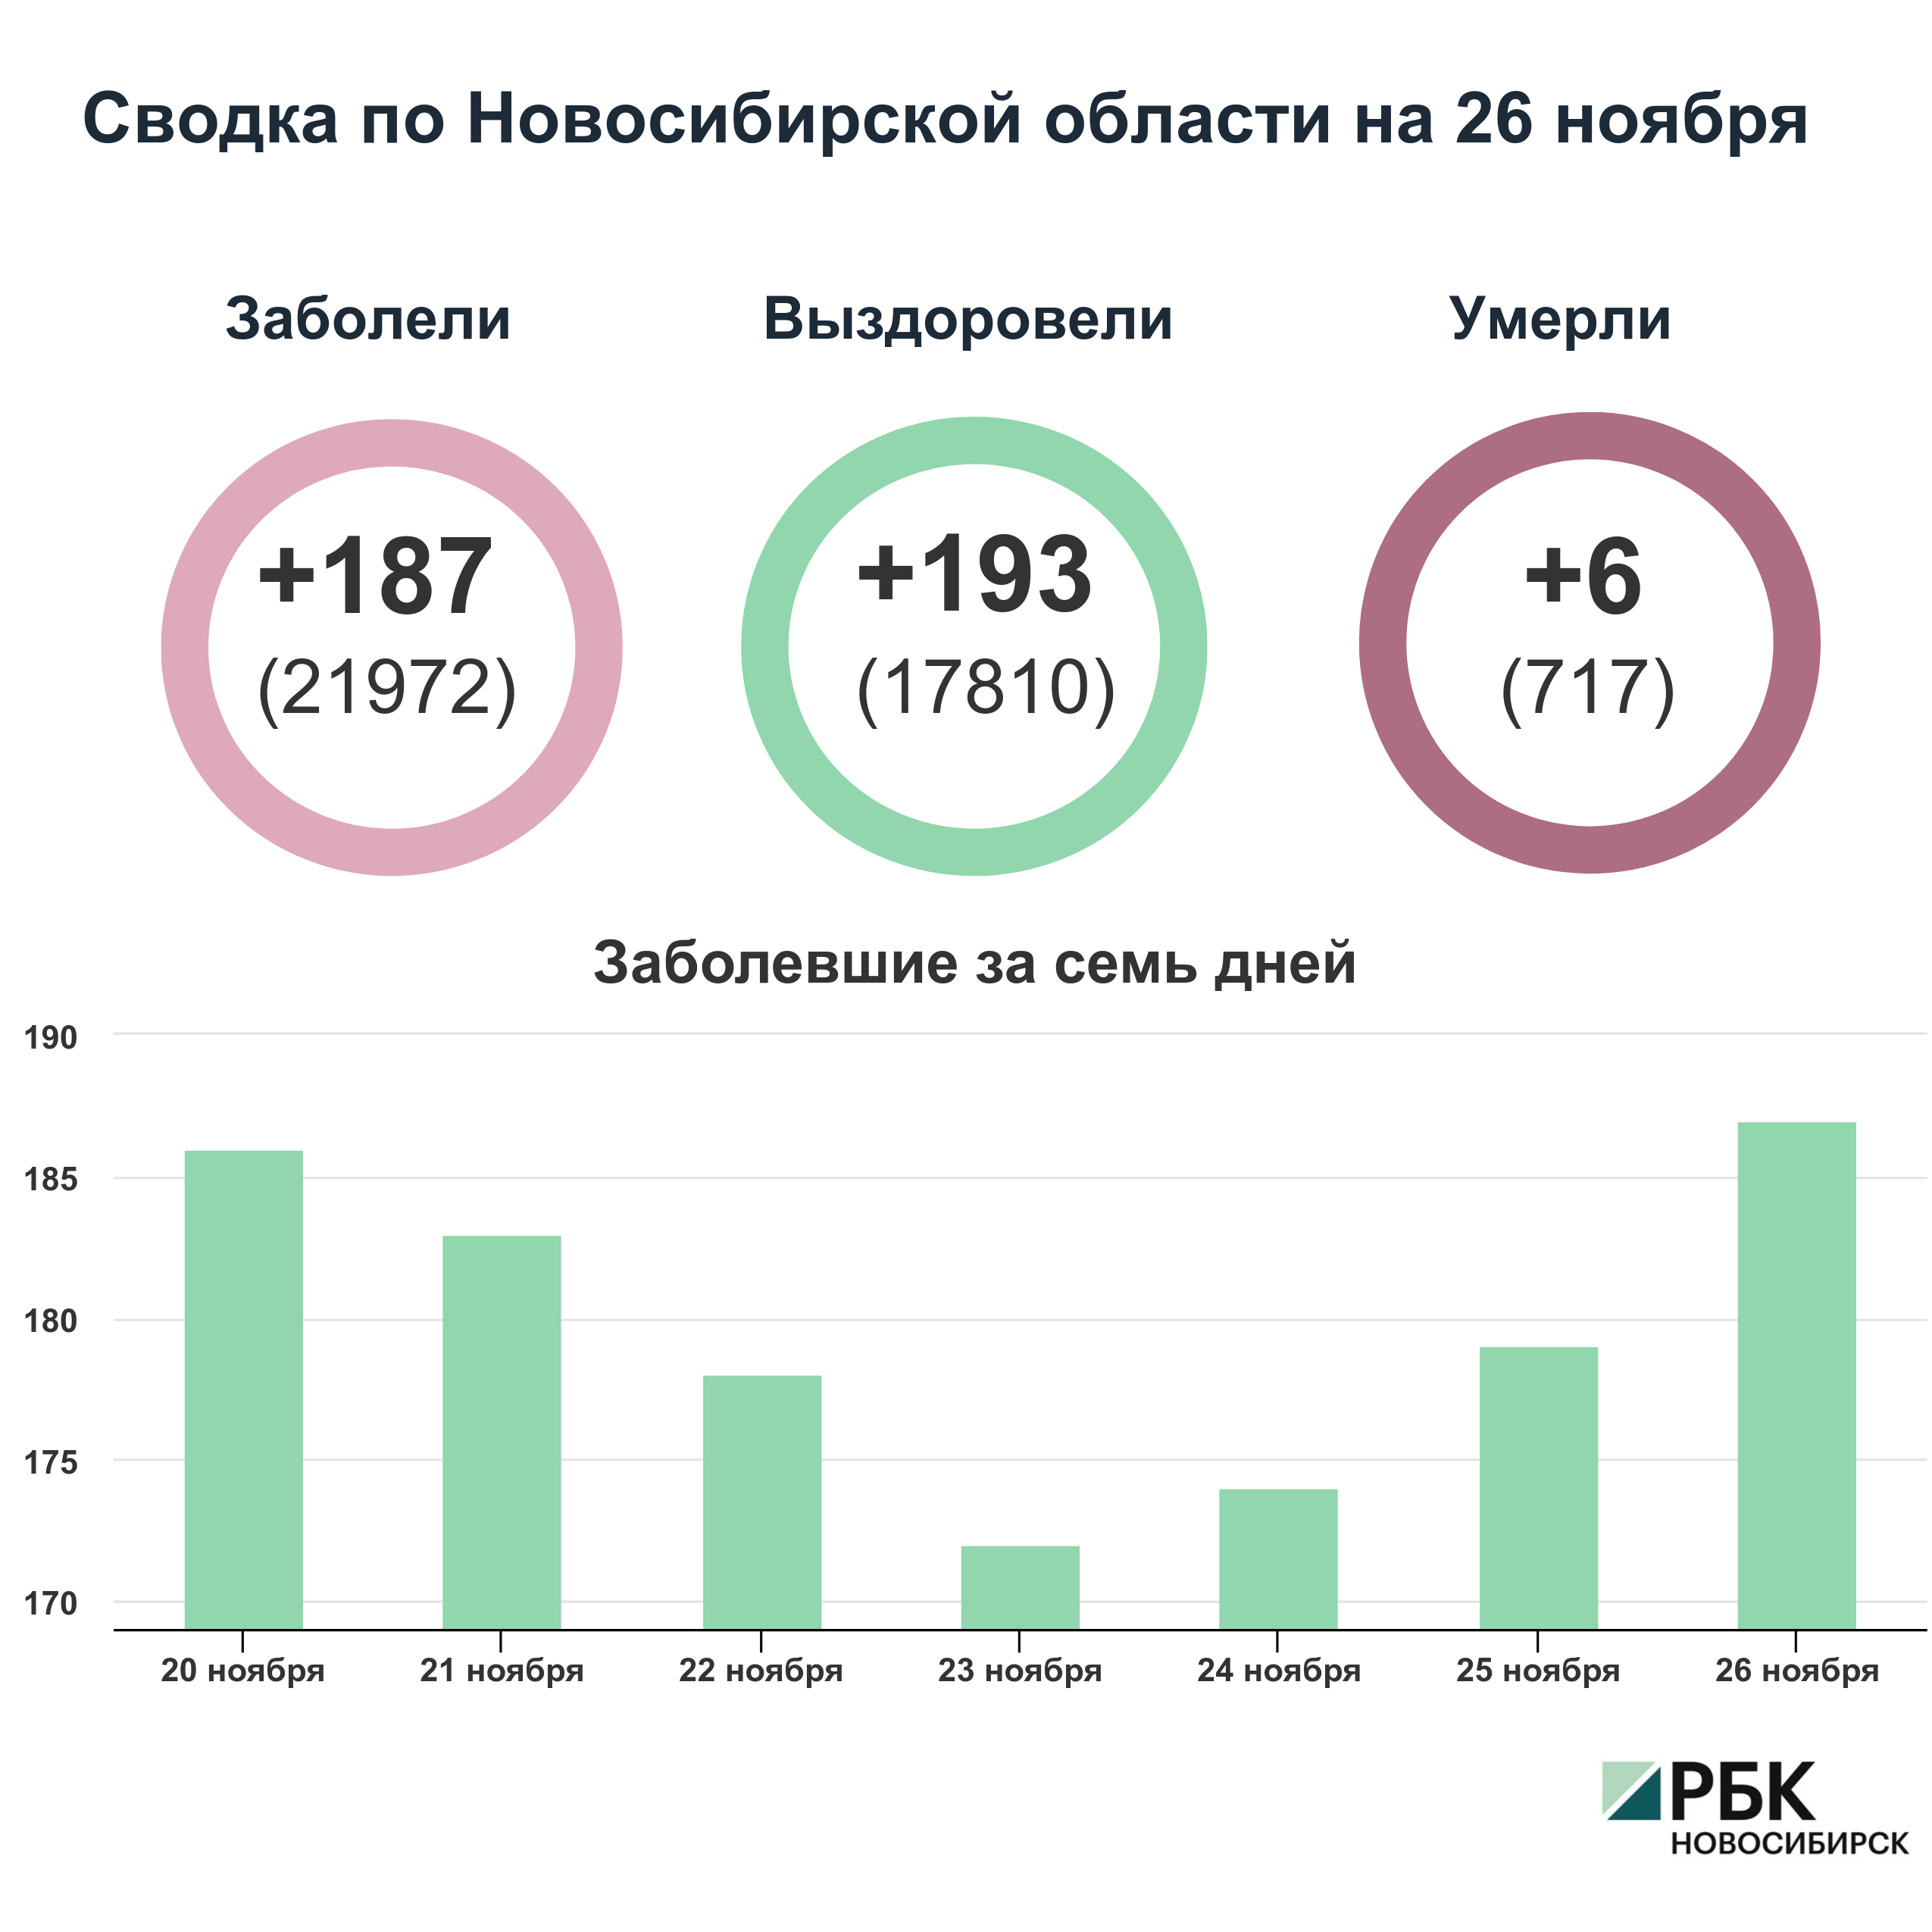 Коронавирус в Новосибирске: сводка на 26 ноября